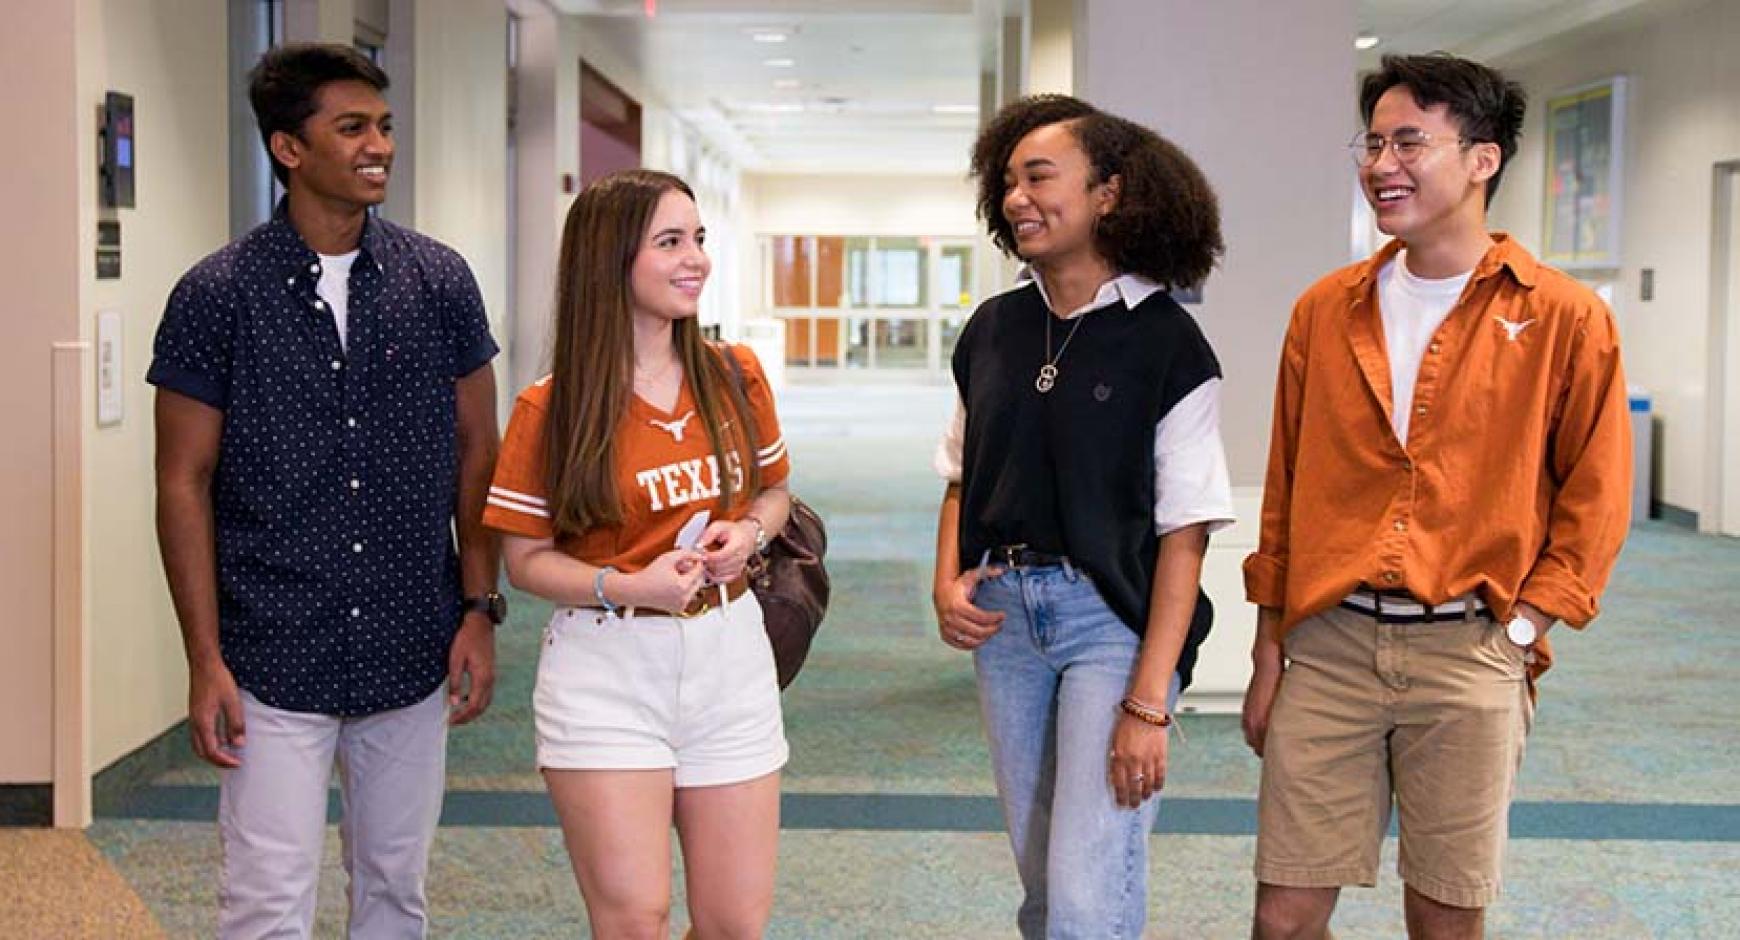 Students talking in a dorm hallway